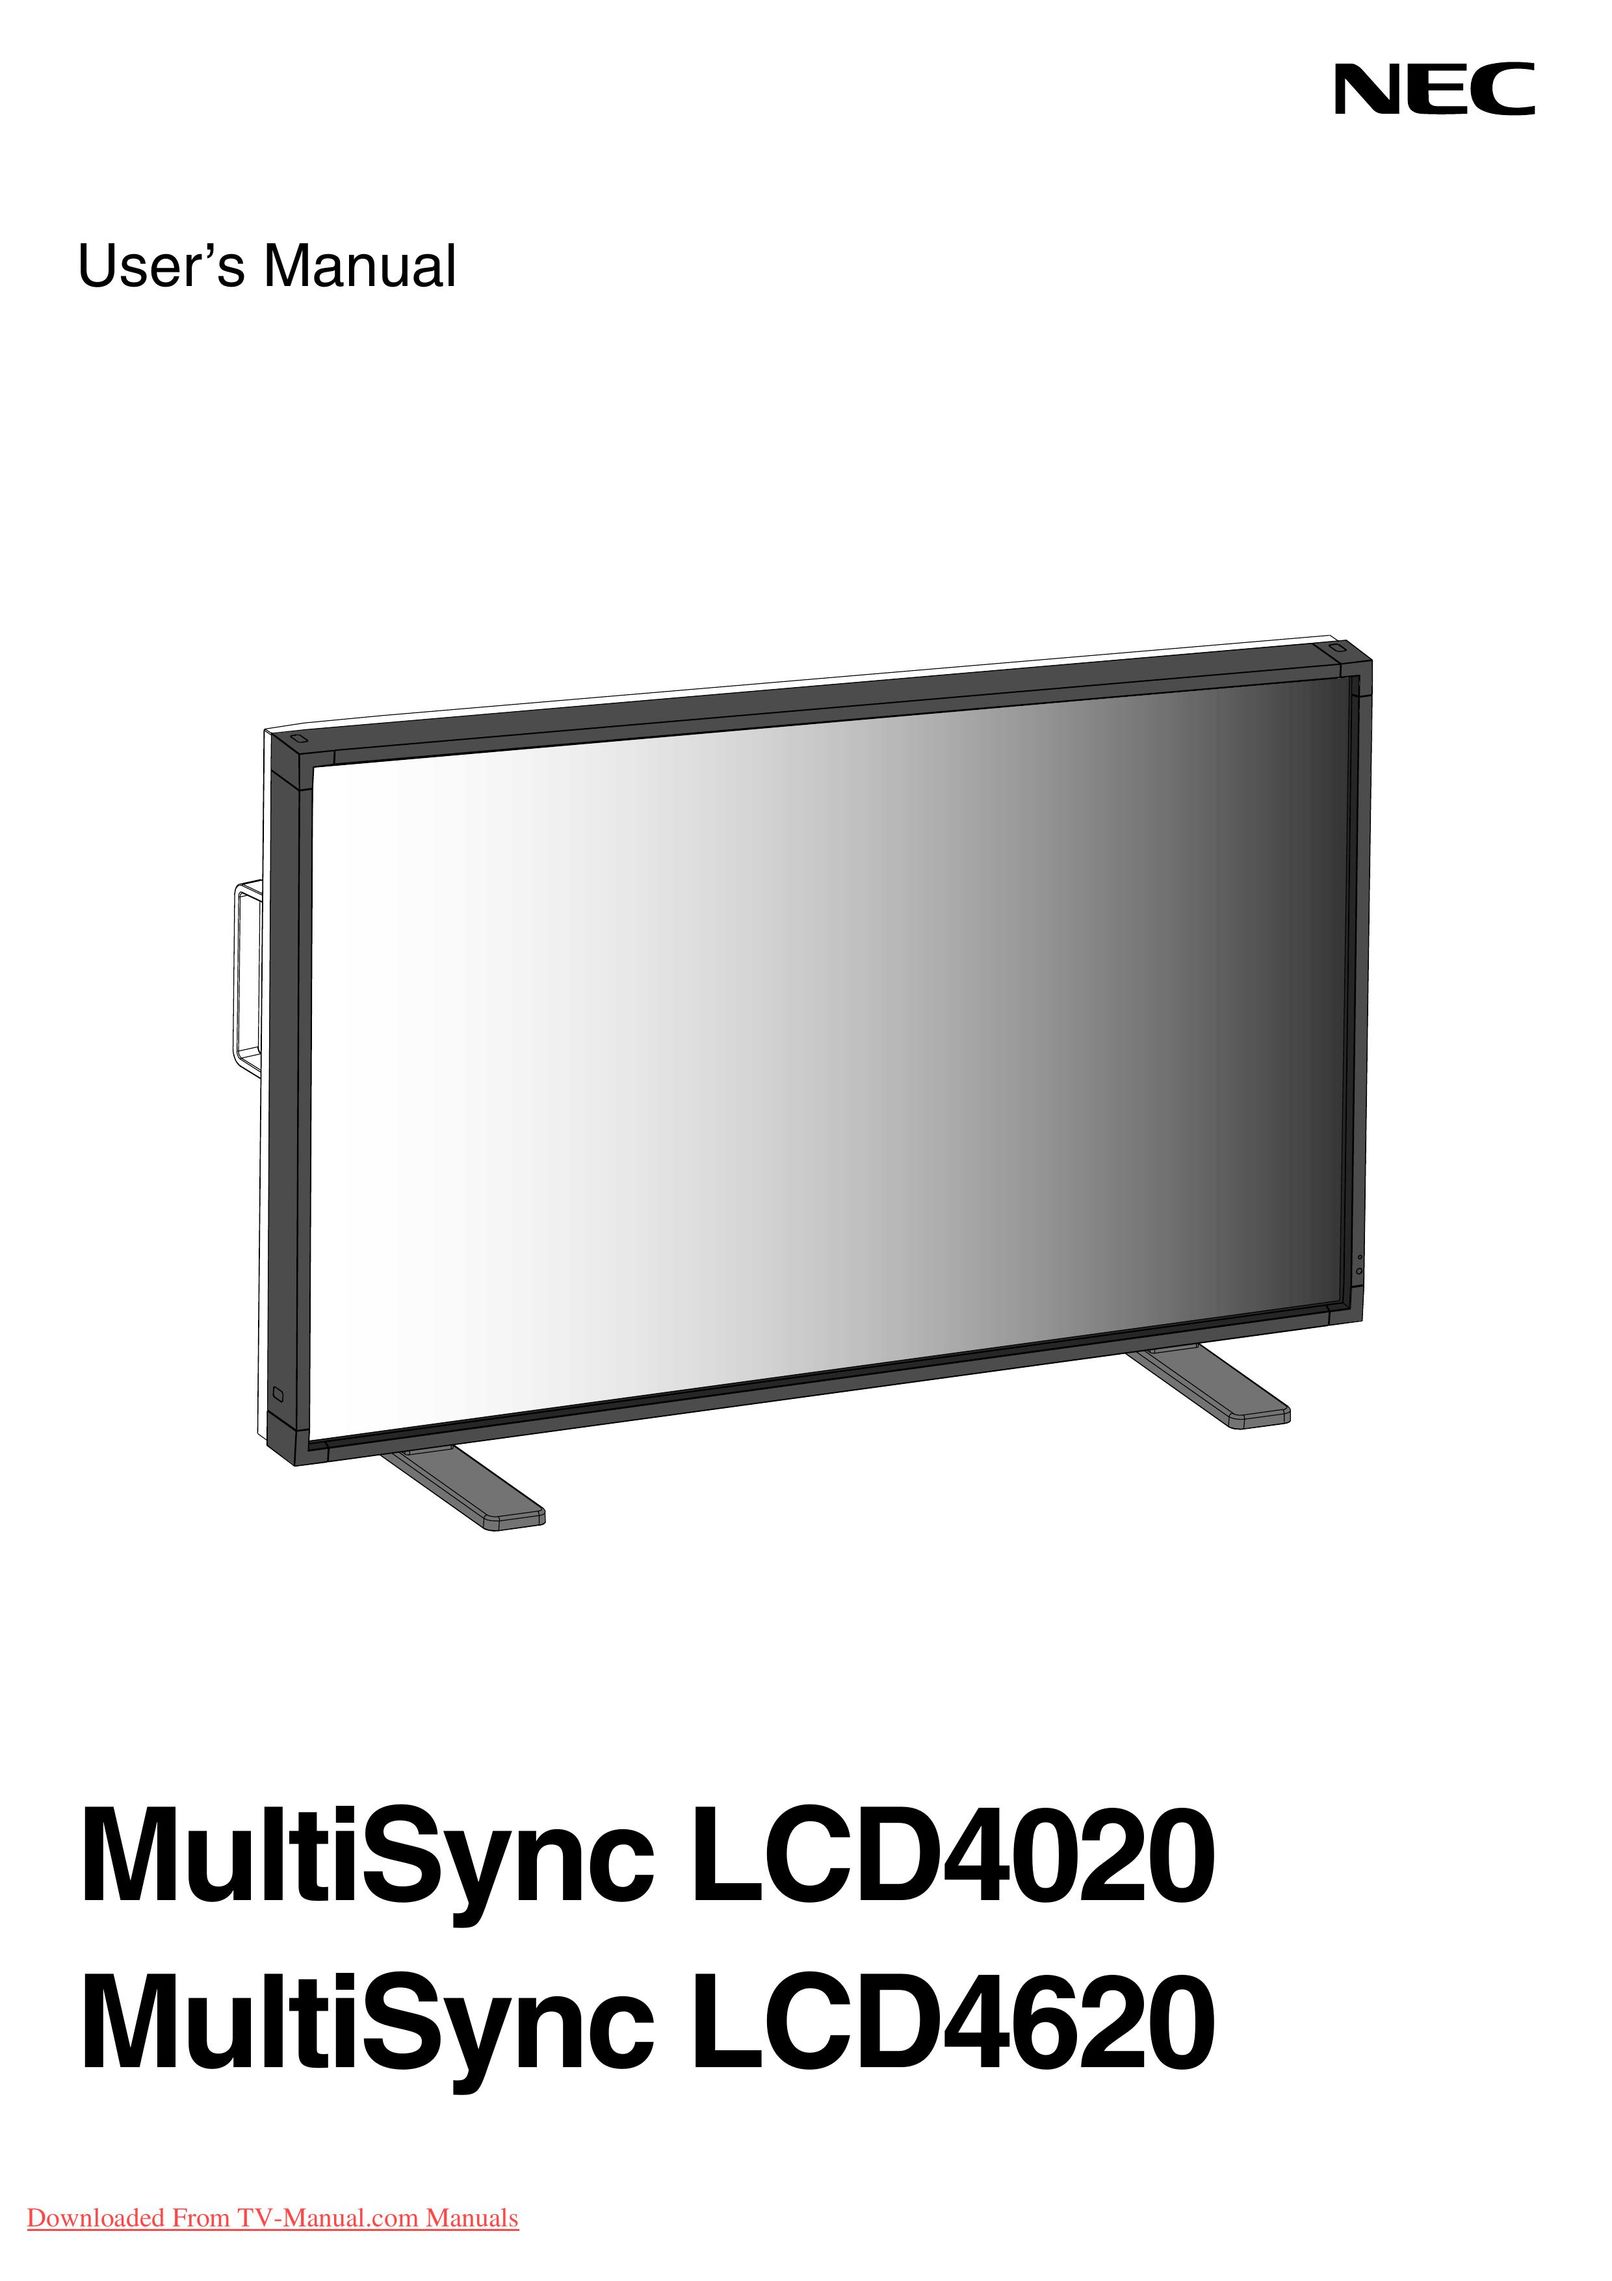 NEC LCD4020 Car Video System User Manual